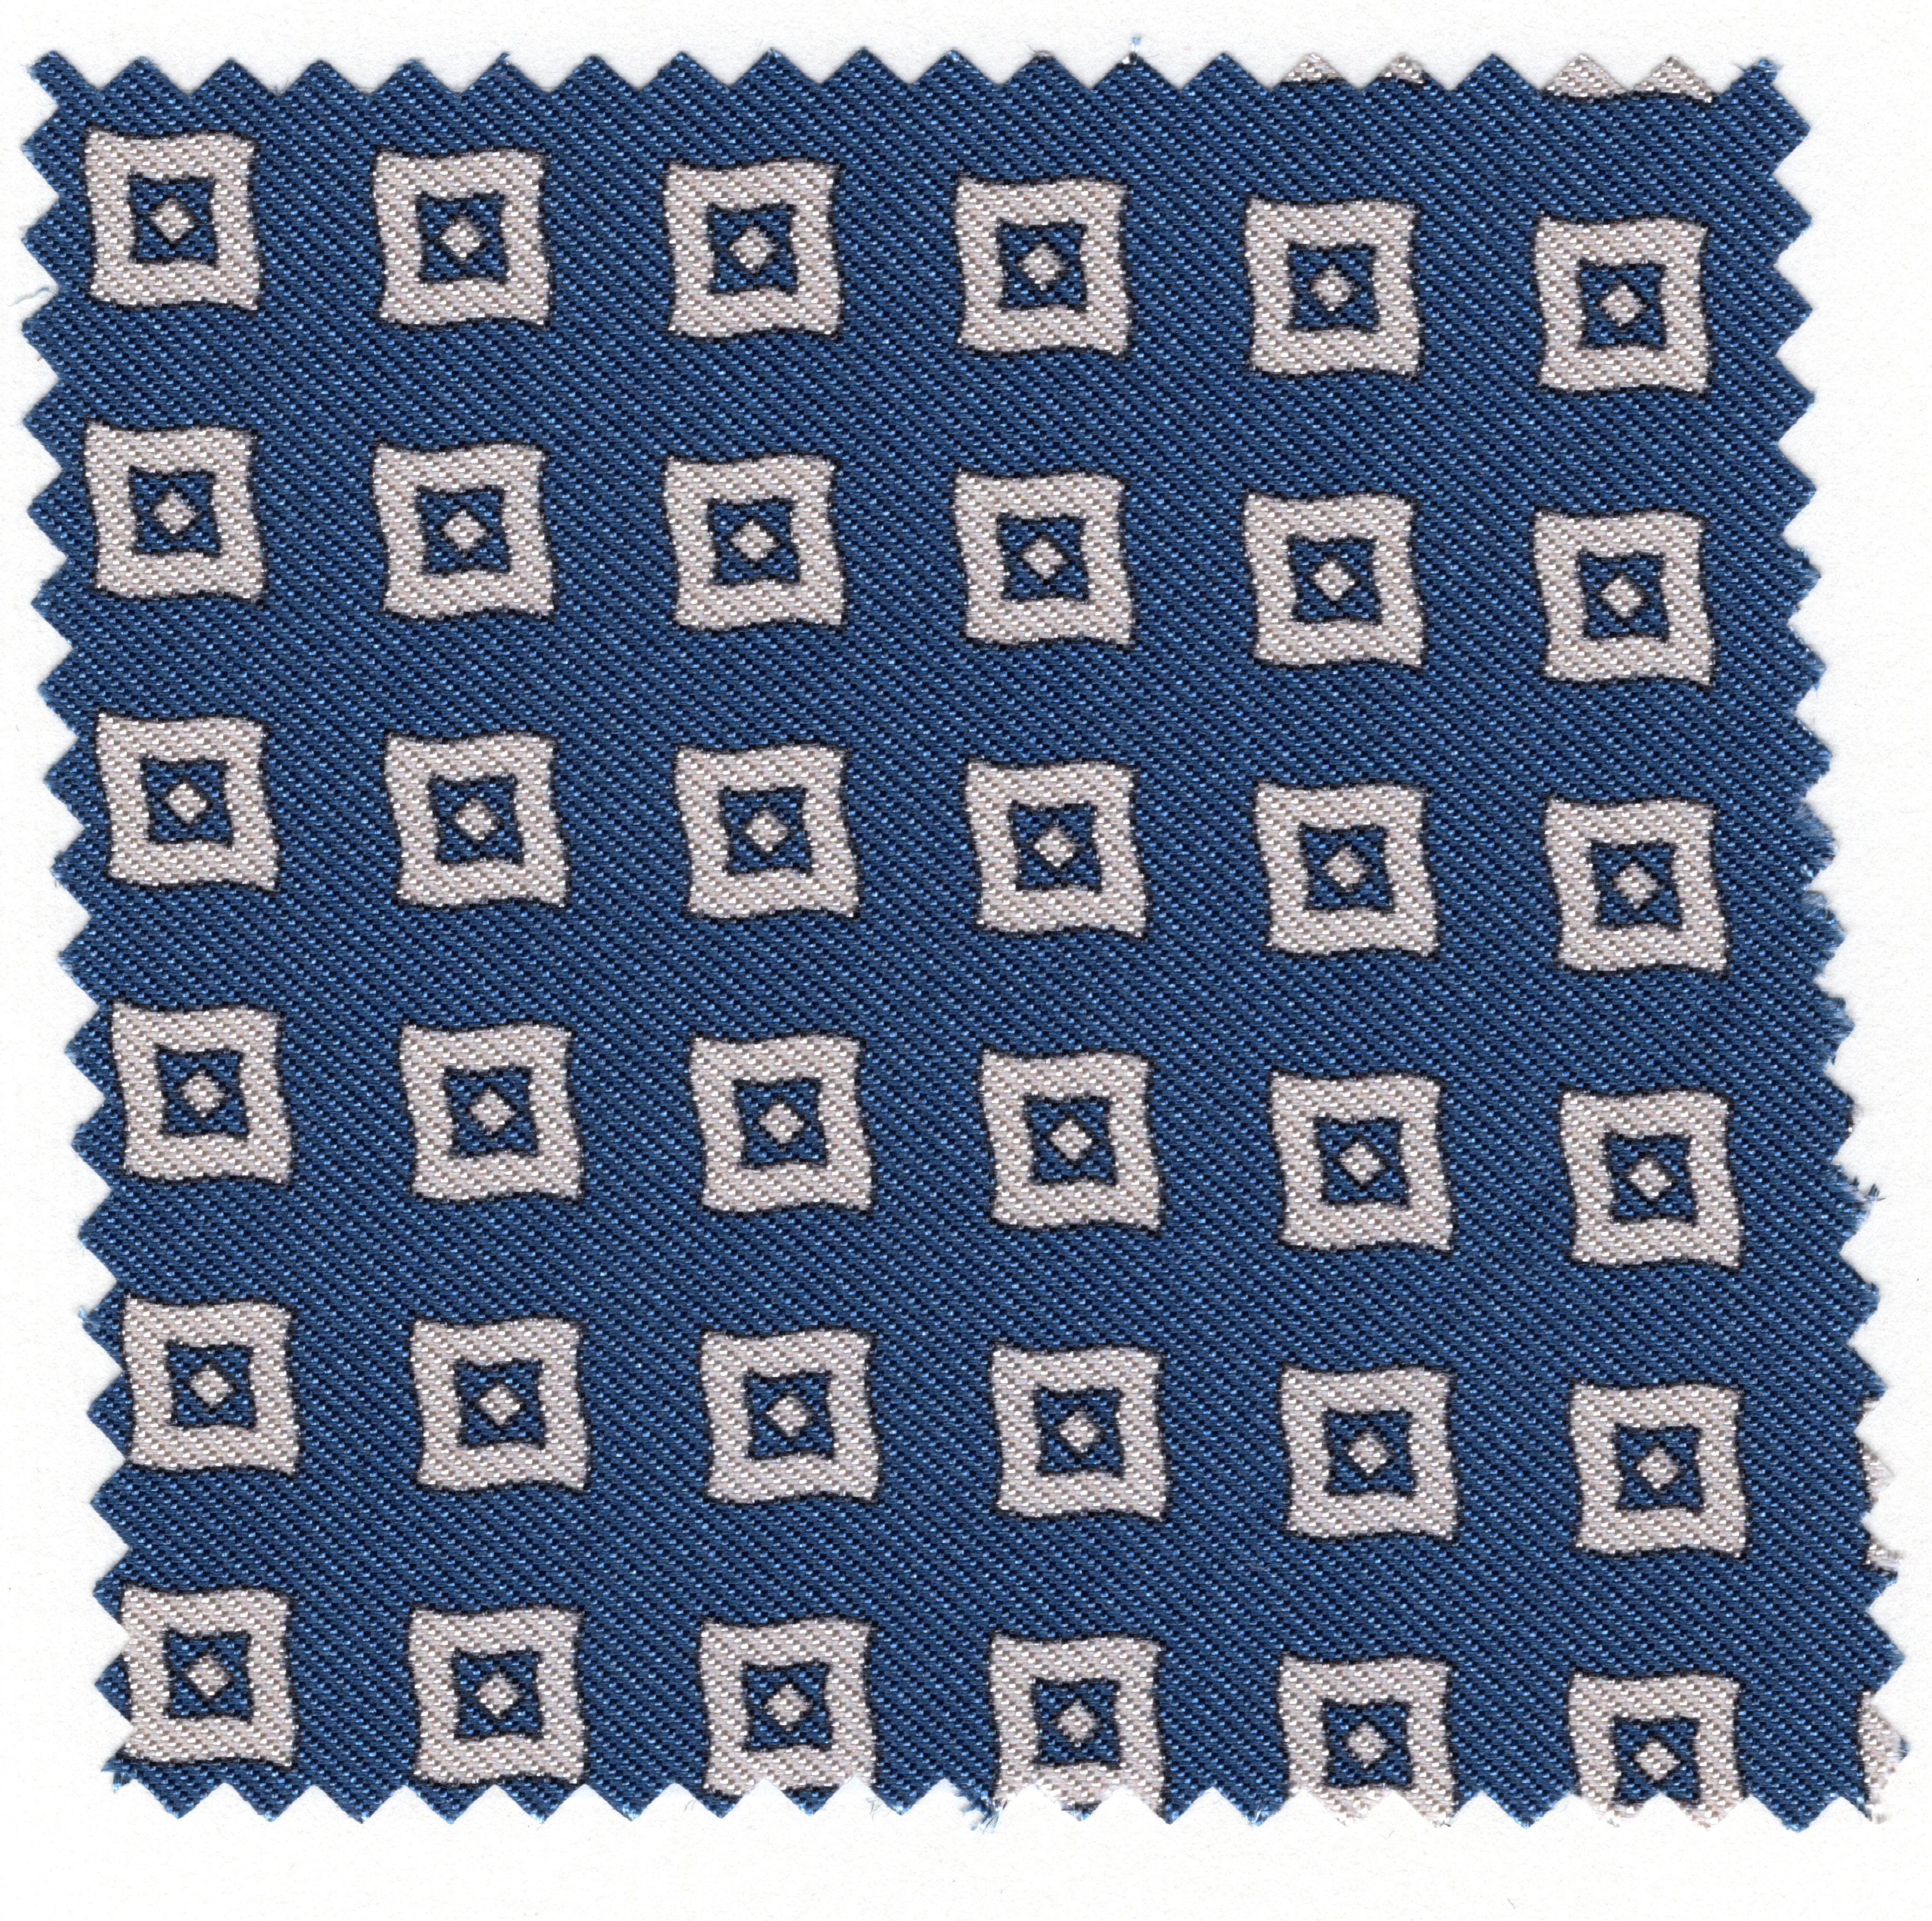 Tie seven bespoke folds - microfantasy 9564-2